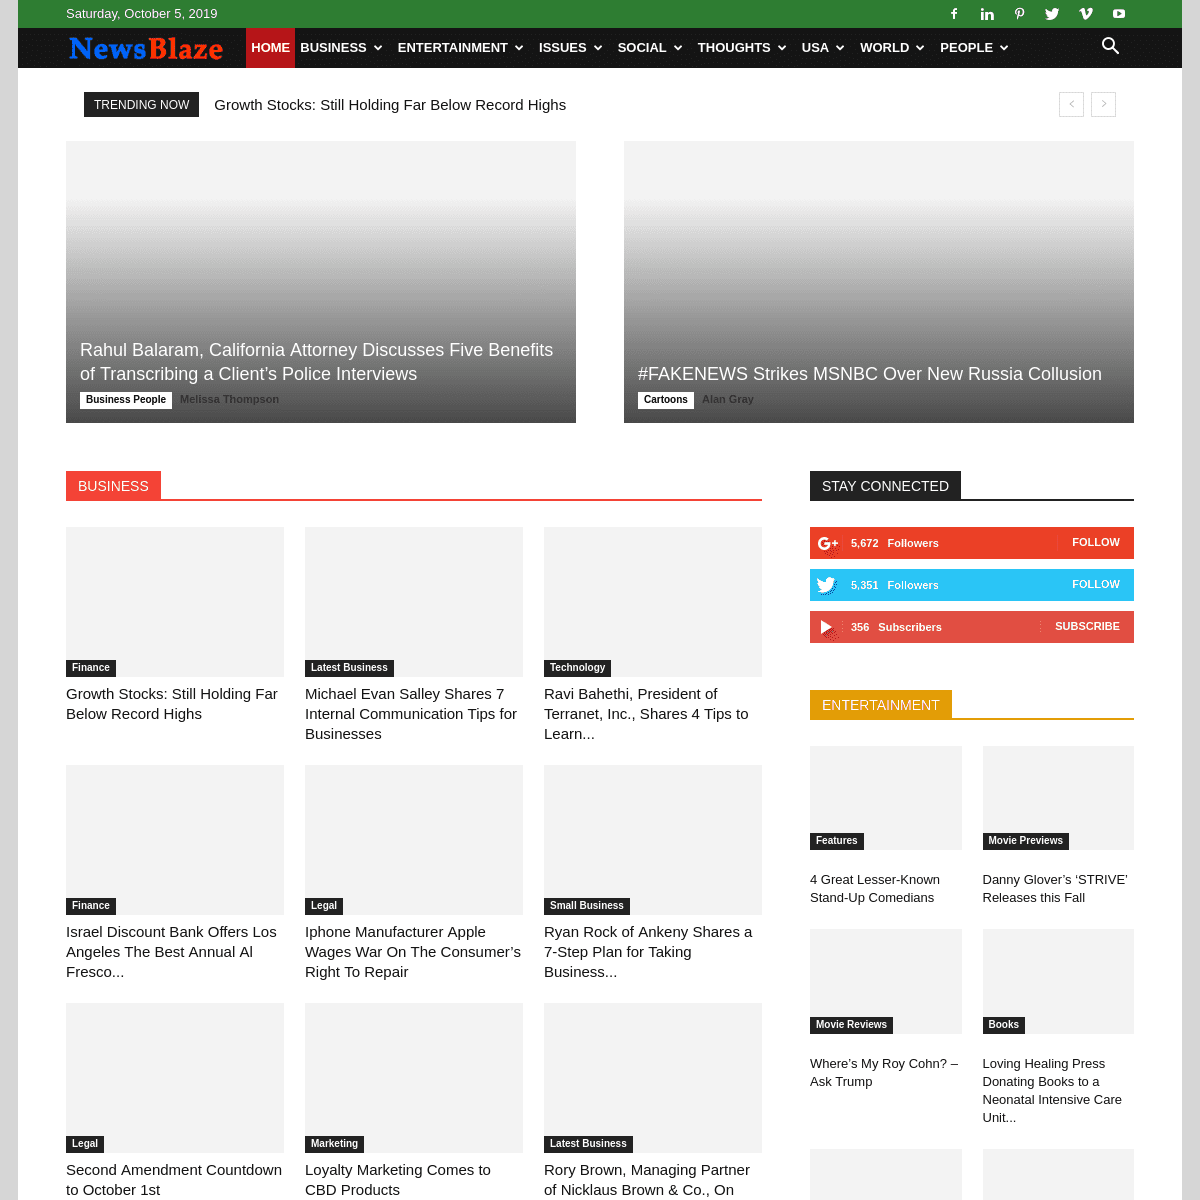 A complete backup of newsblaze.com